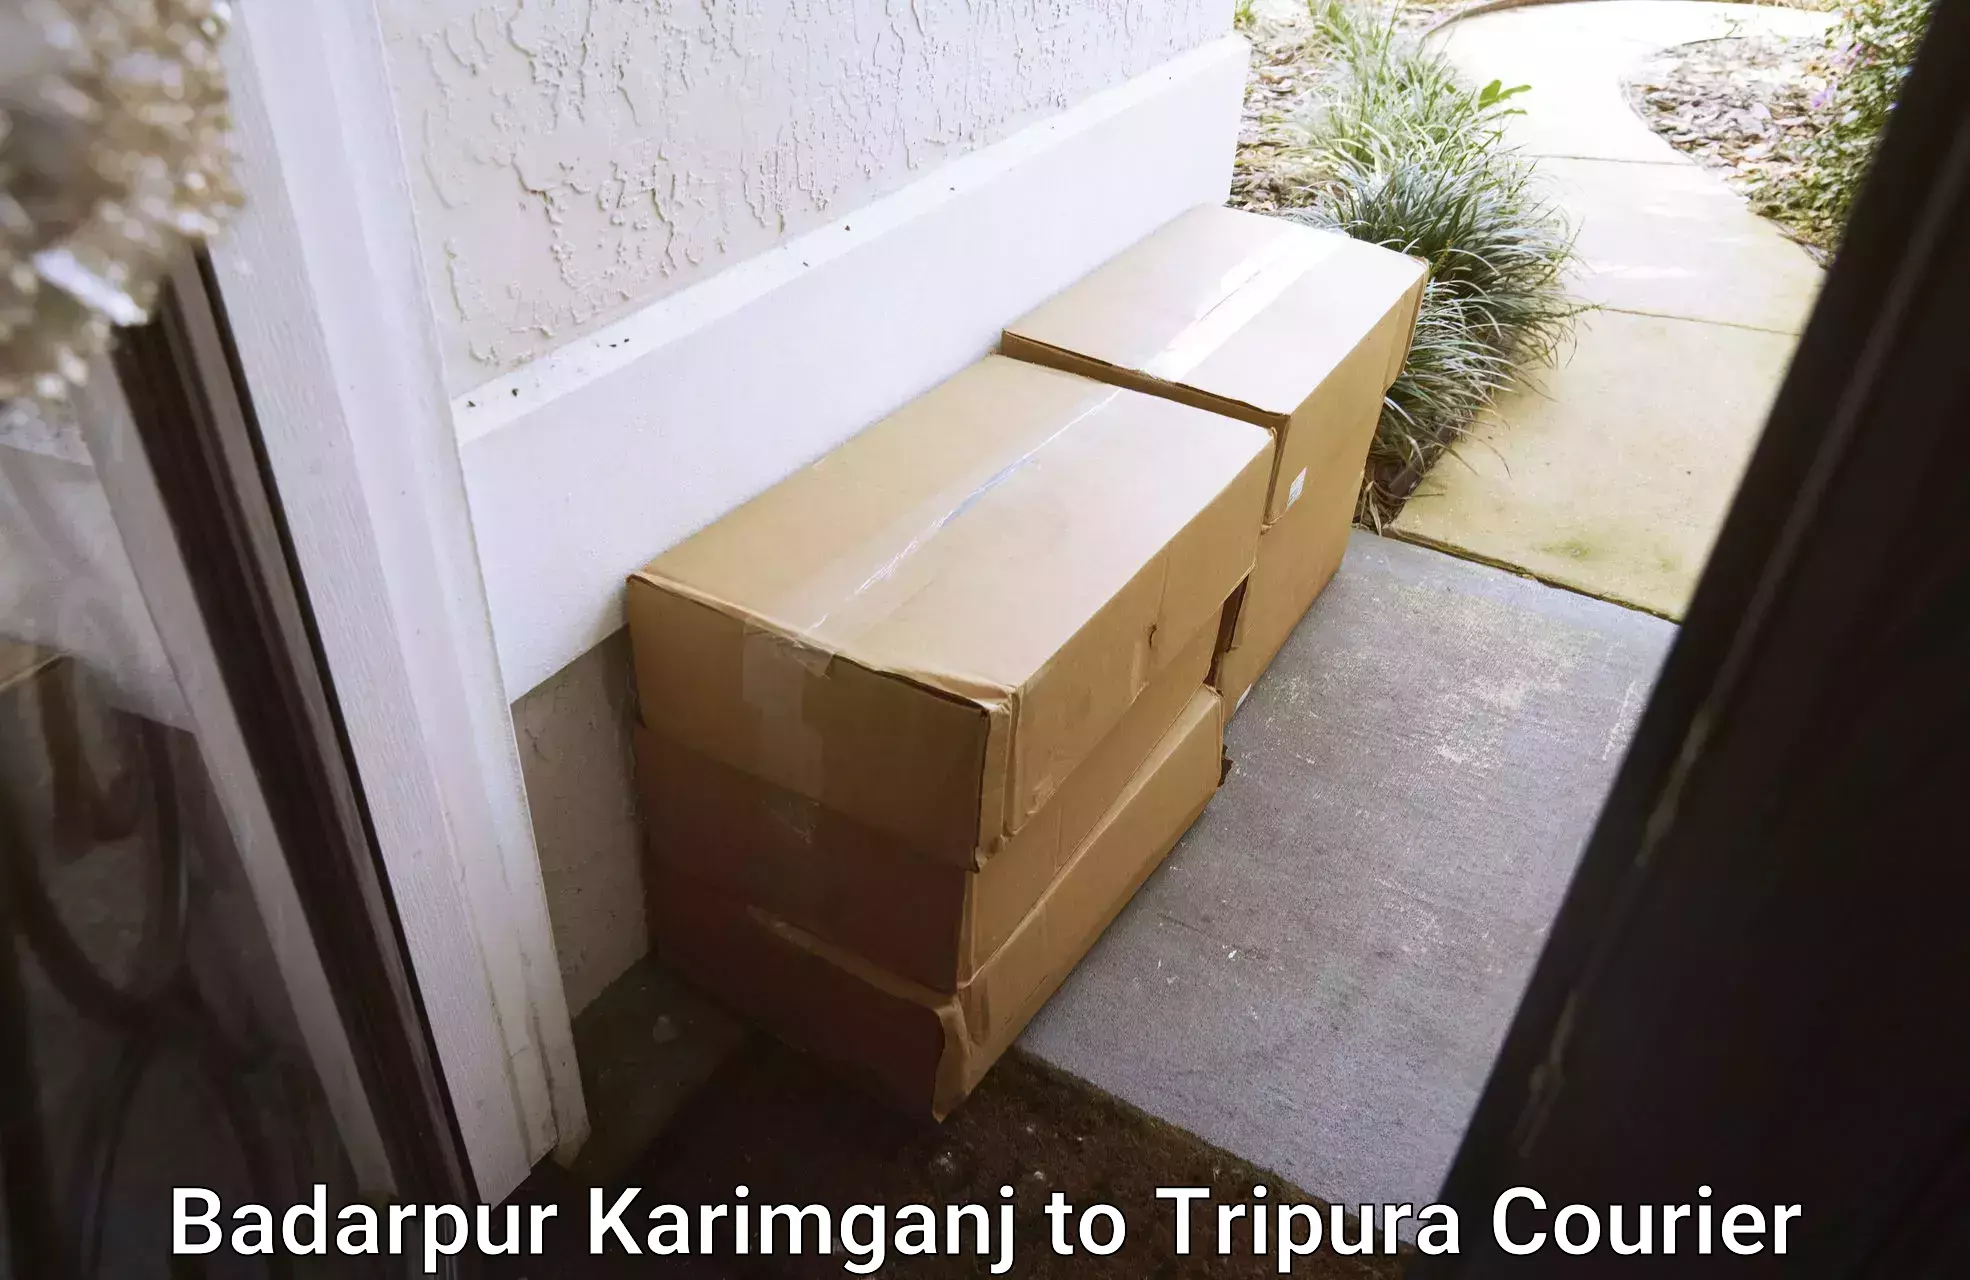 Express delivery network Badarpur Karimganj to Udaipur Tripura